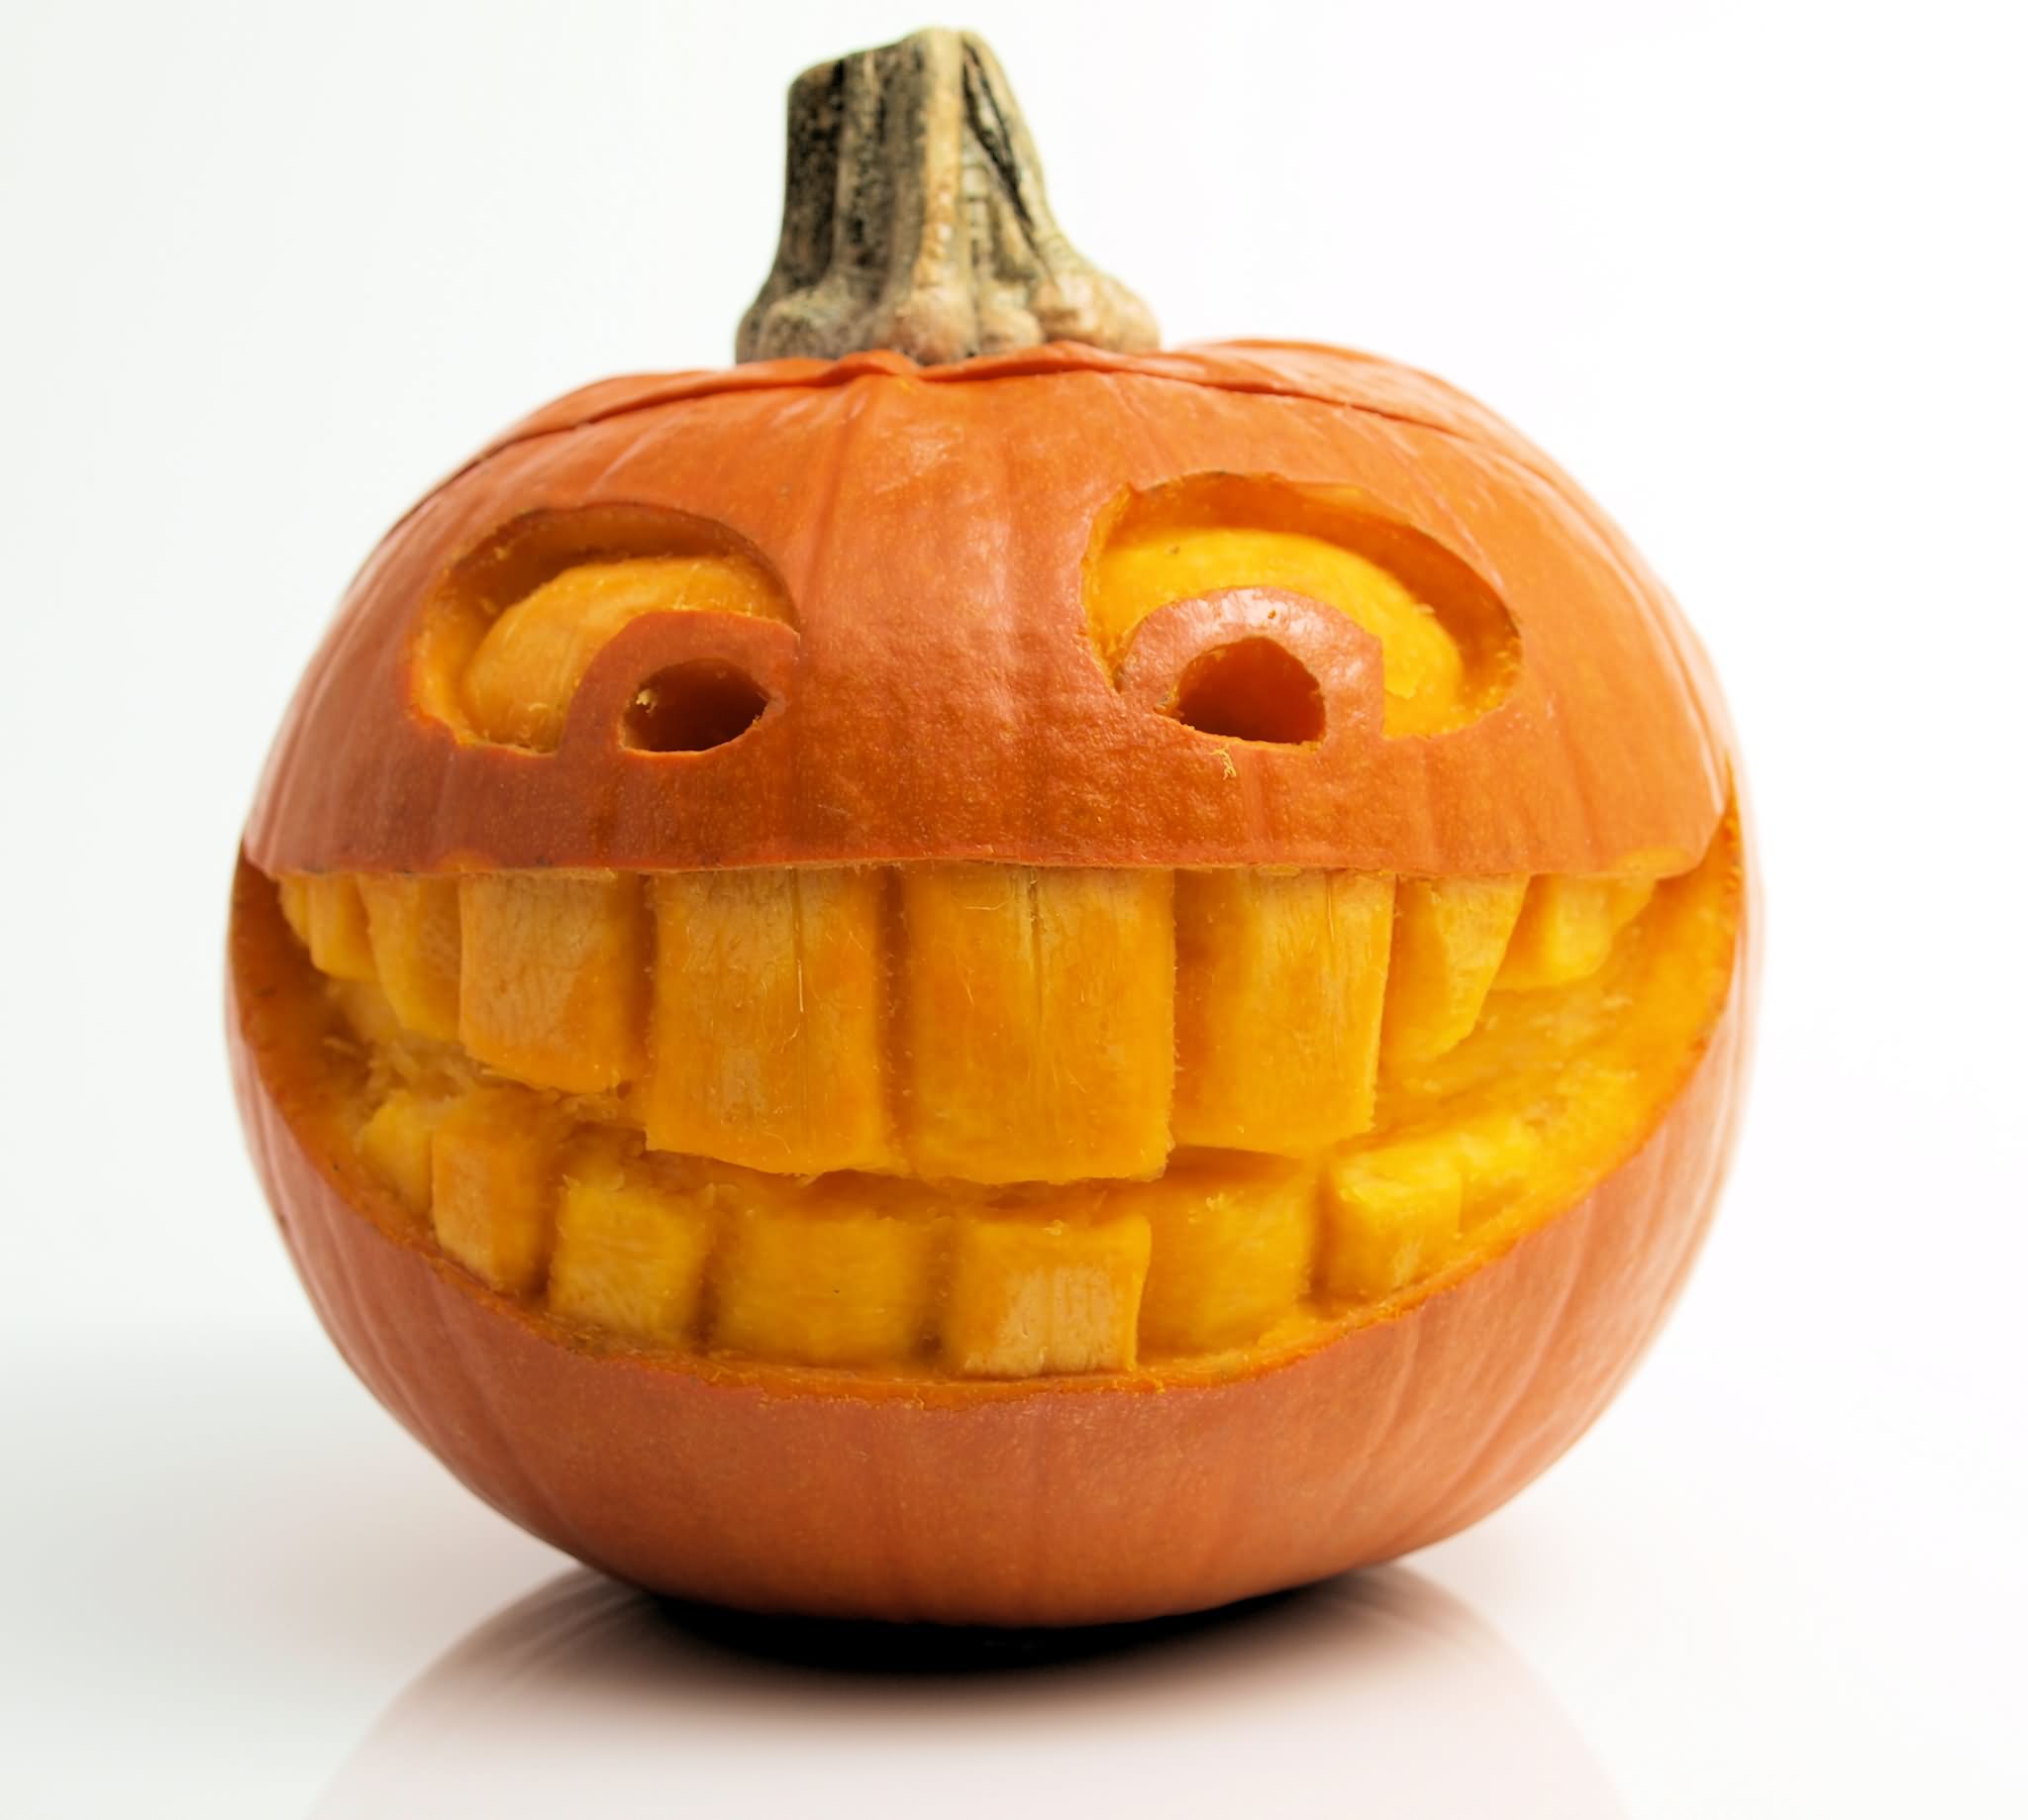 Funny Pumpkin Smiling Face Image